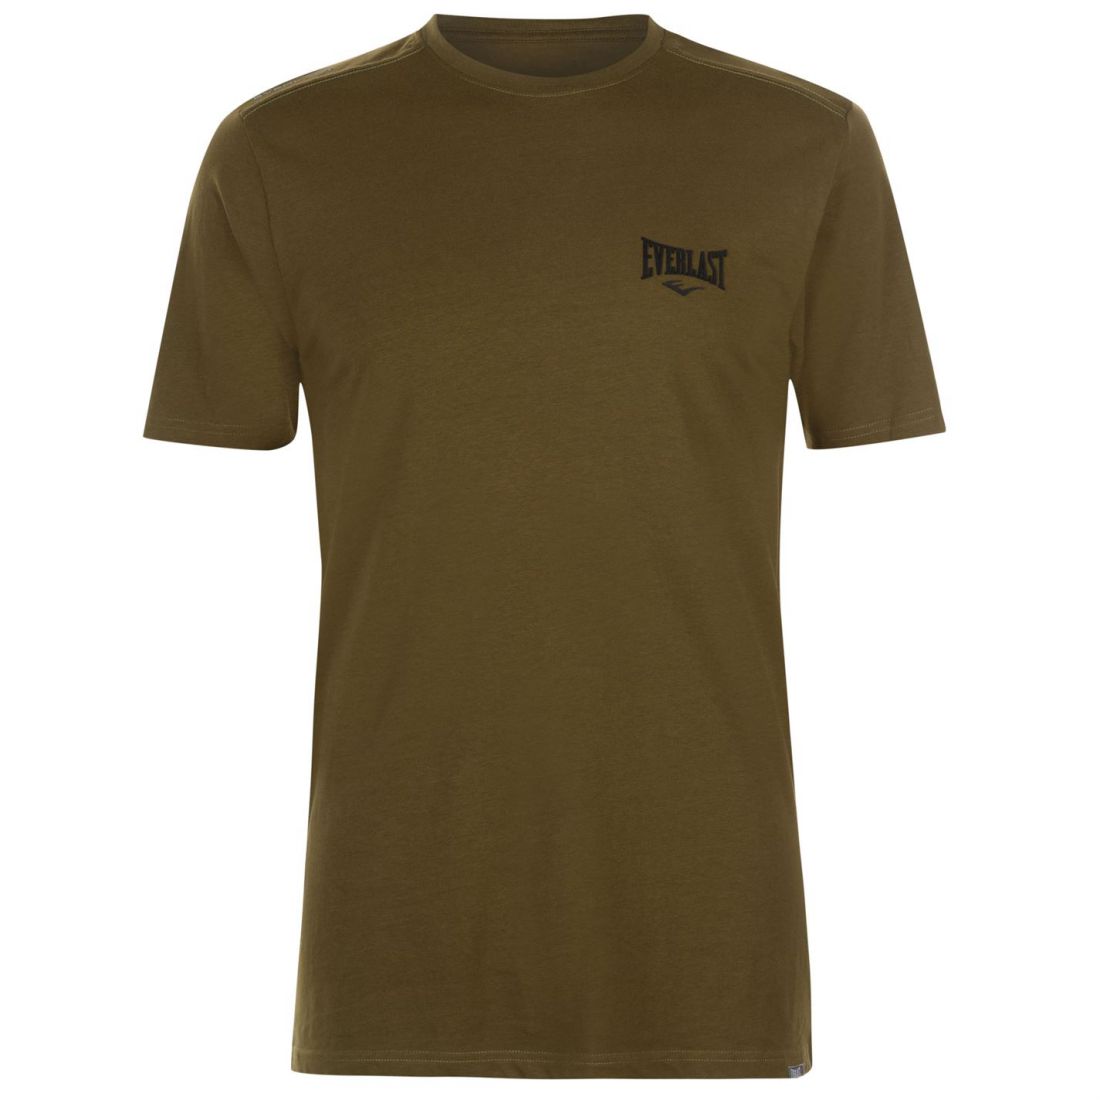 Everlast Logo T Shirt Mens Gents Crew Neck Tee Top Short Sleeve | eBay